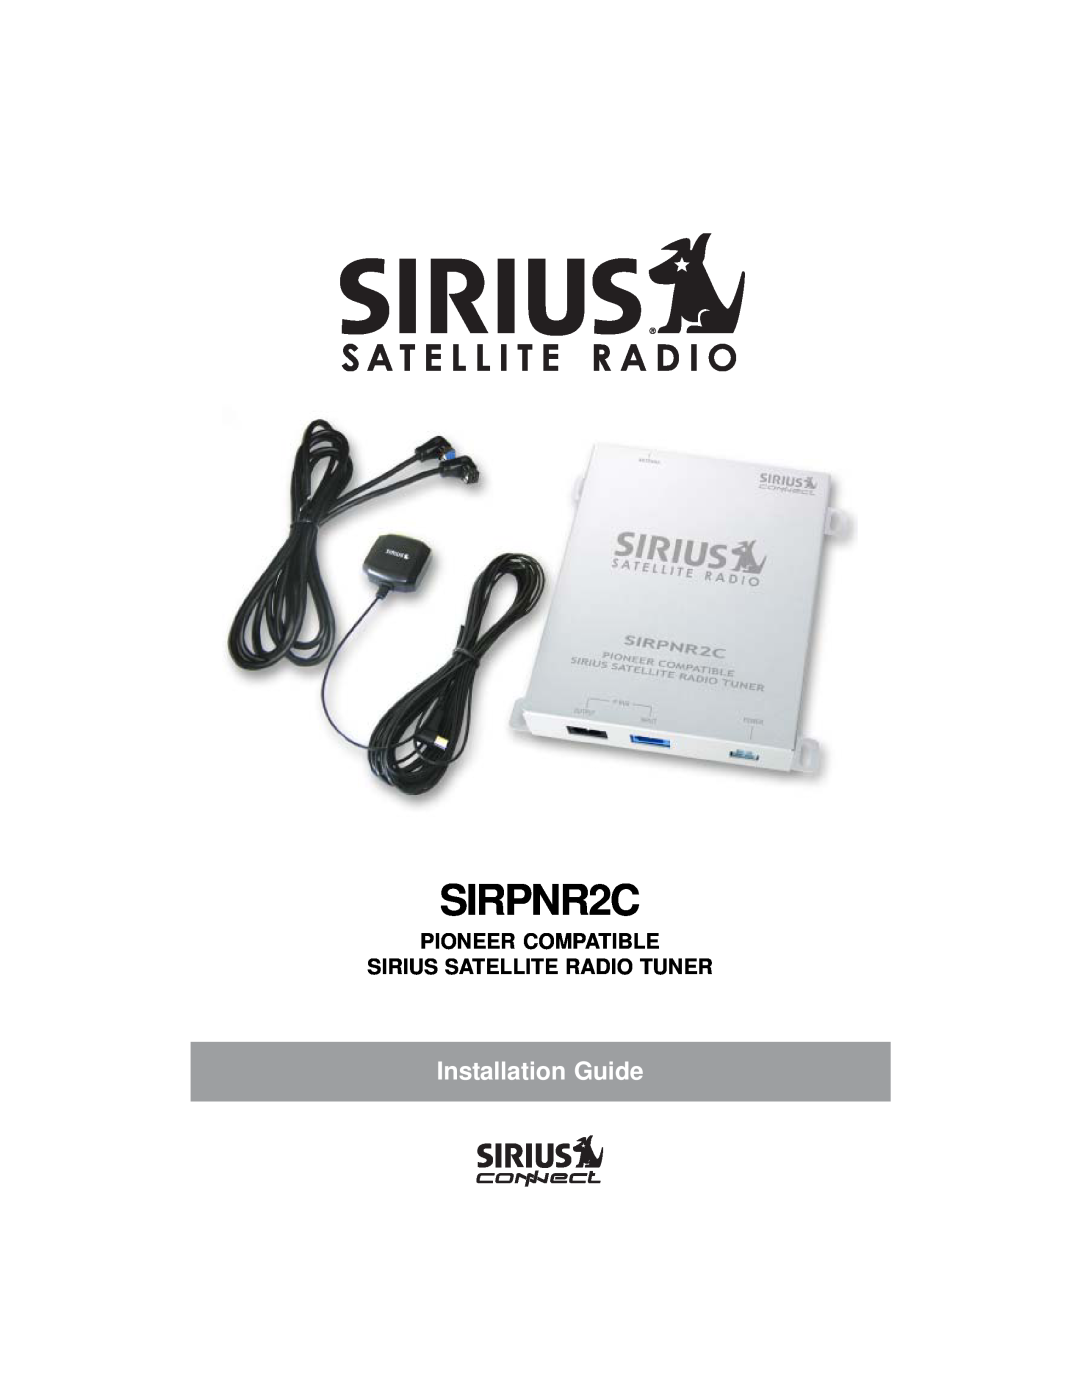 Sirius Satellite Radio SIRPNR2C manual Pioneer Compatible Sirius Satellite Radio Tuner, Installation Guide 